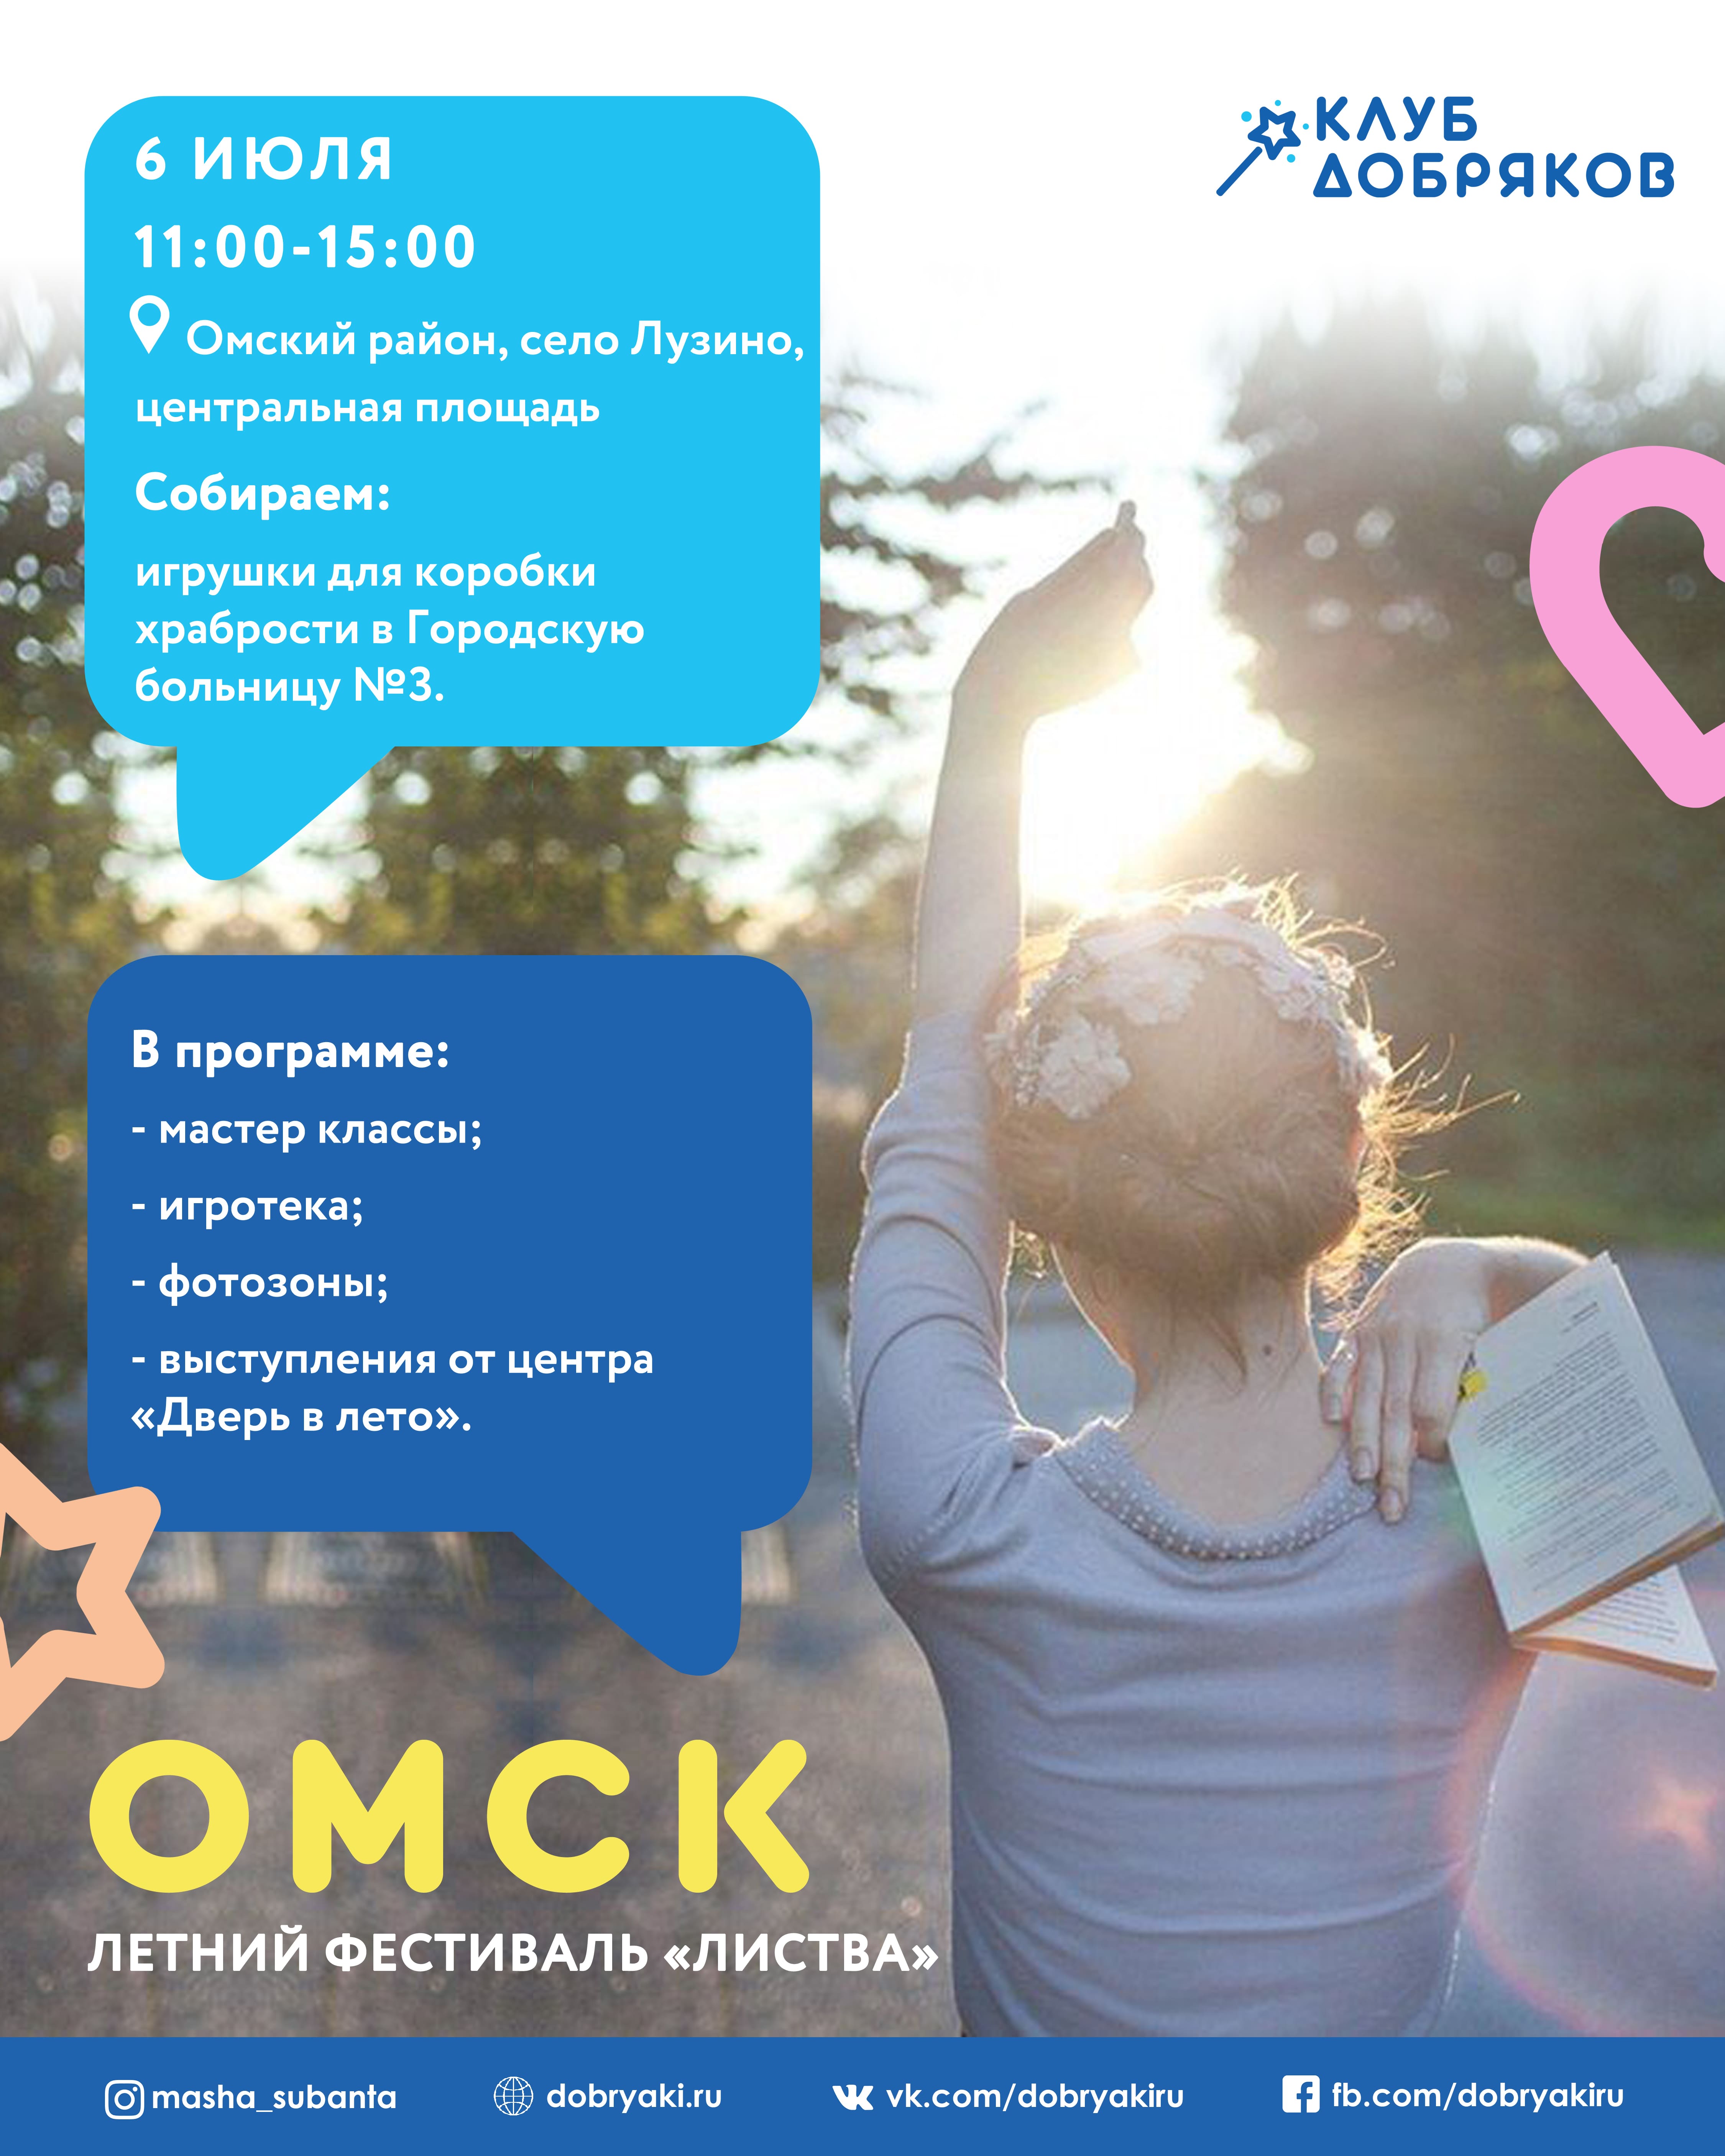 Добряки приглашают на омский летний фестиваль «Листва»